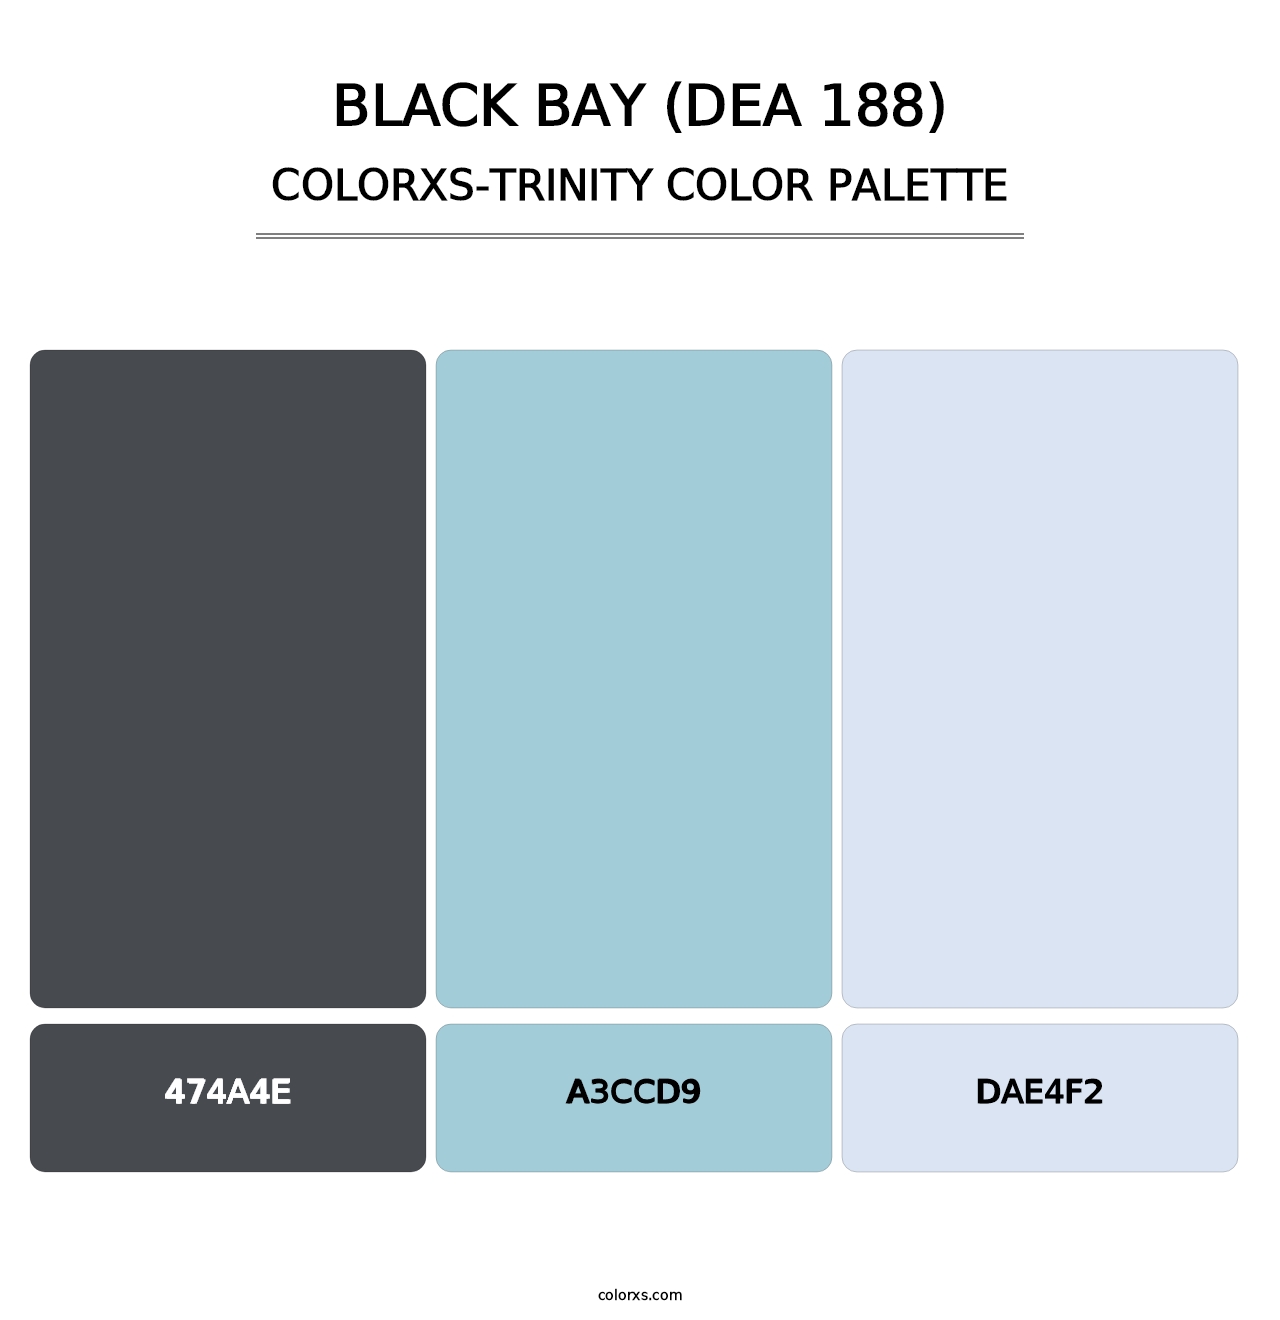 Black Bay (DEA 188) - Colorxs Trinity Palette